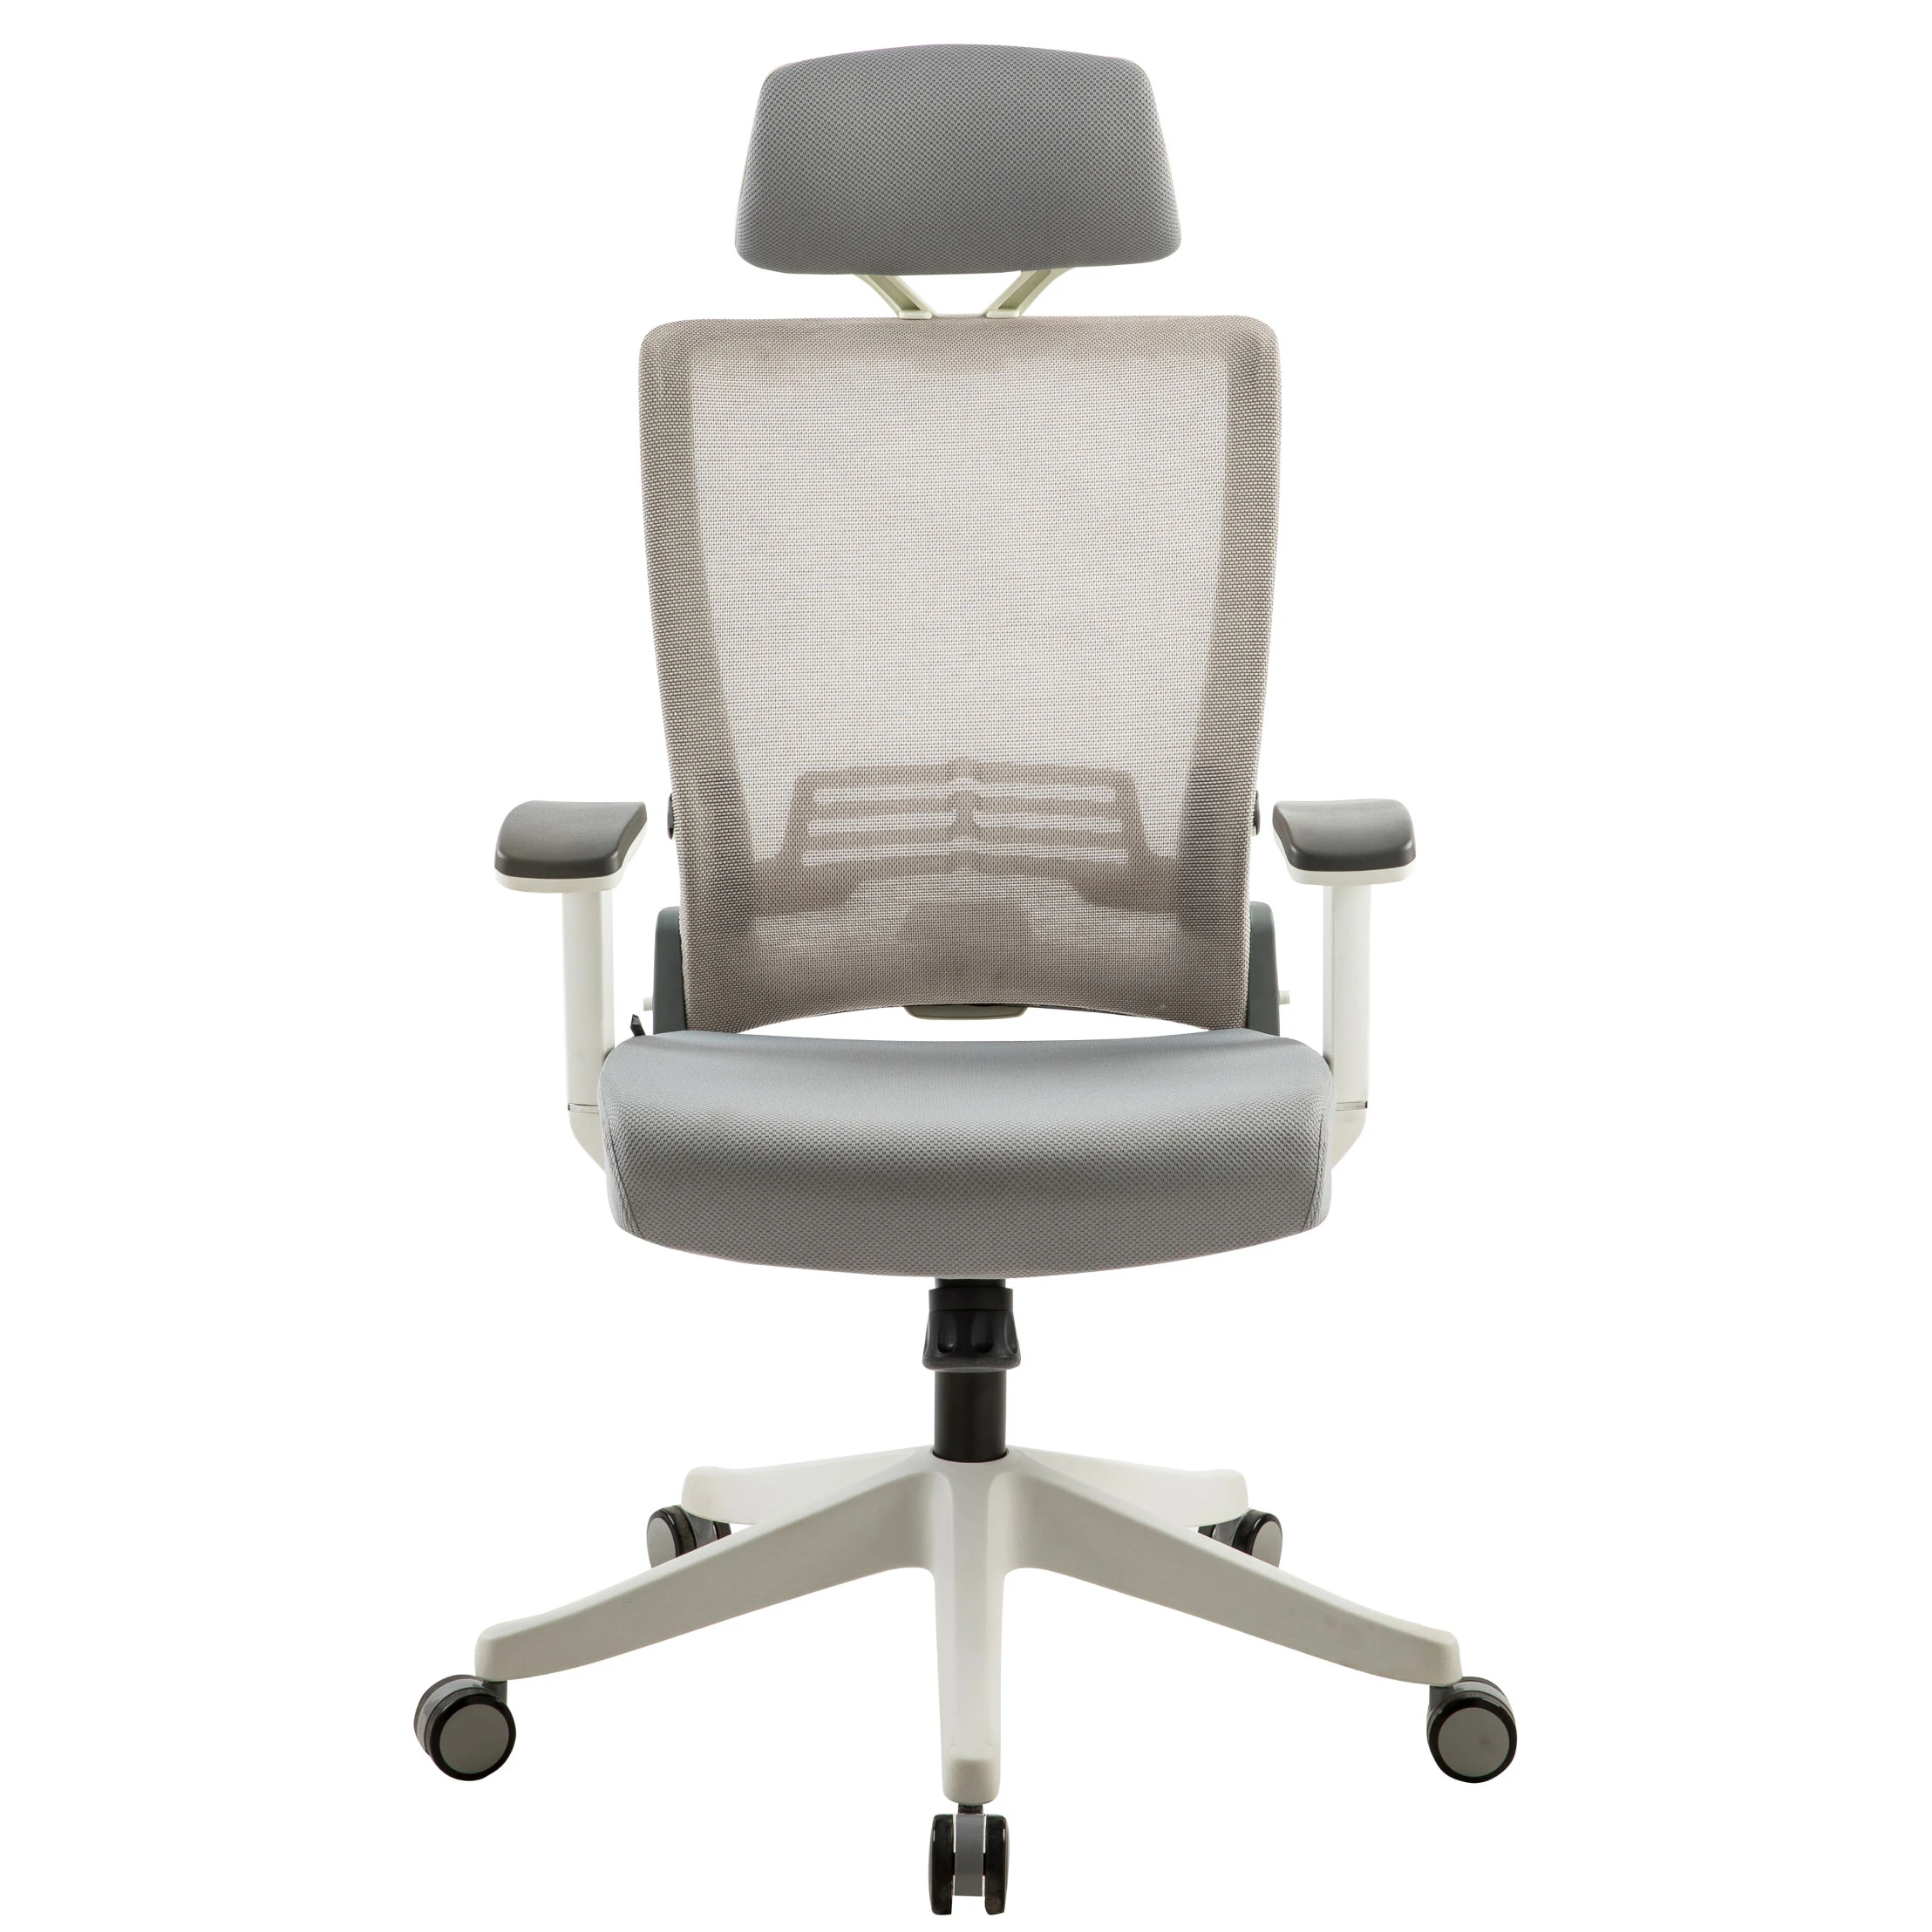 Office Chair | Ergonomic Chair | KIKO Office & Computer Chair by Navo Ergonomic